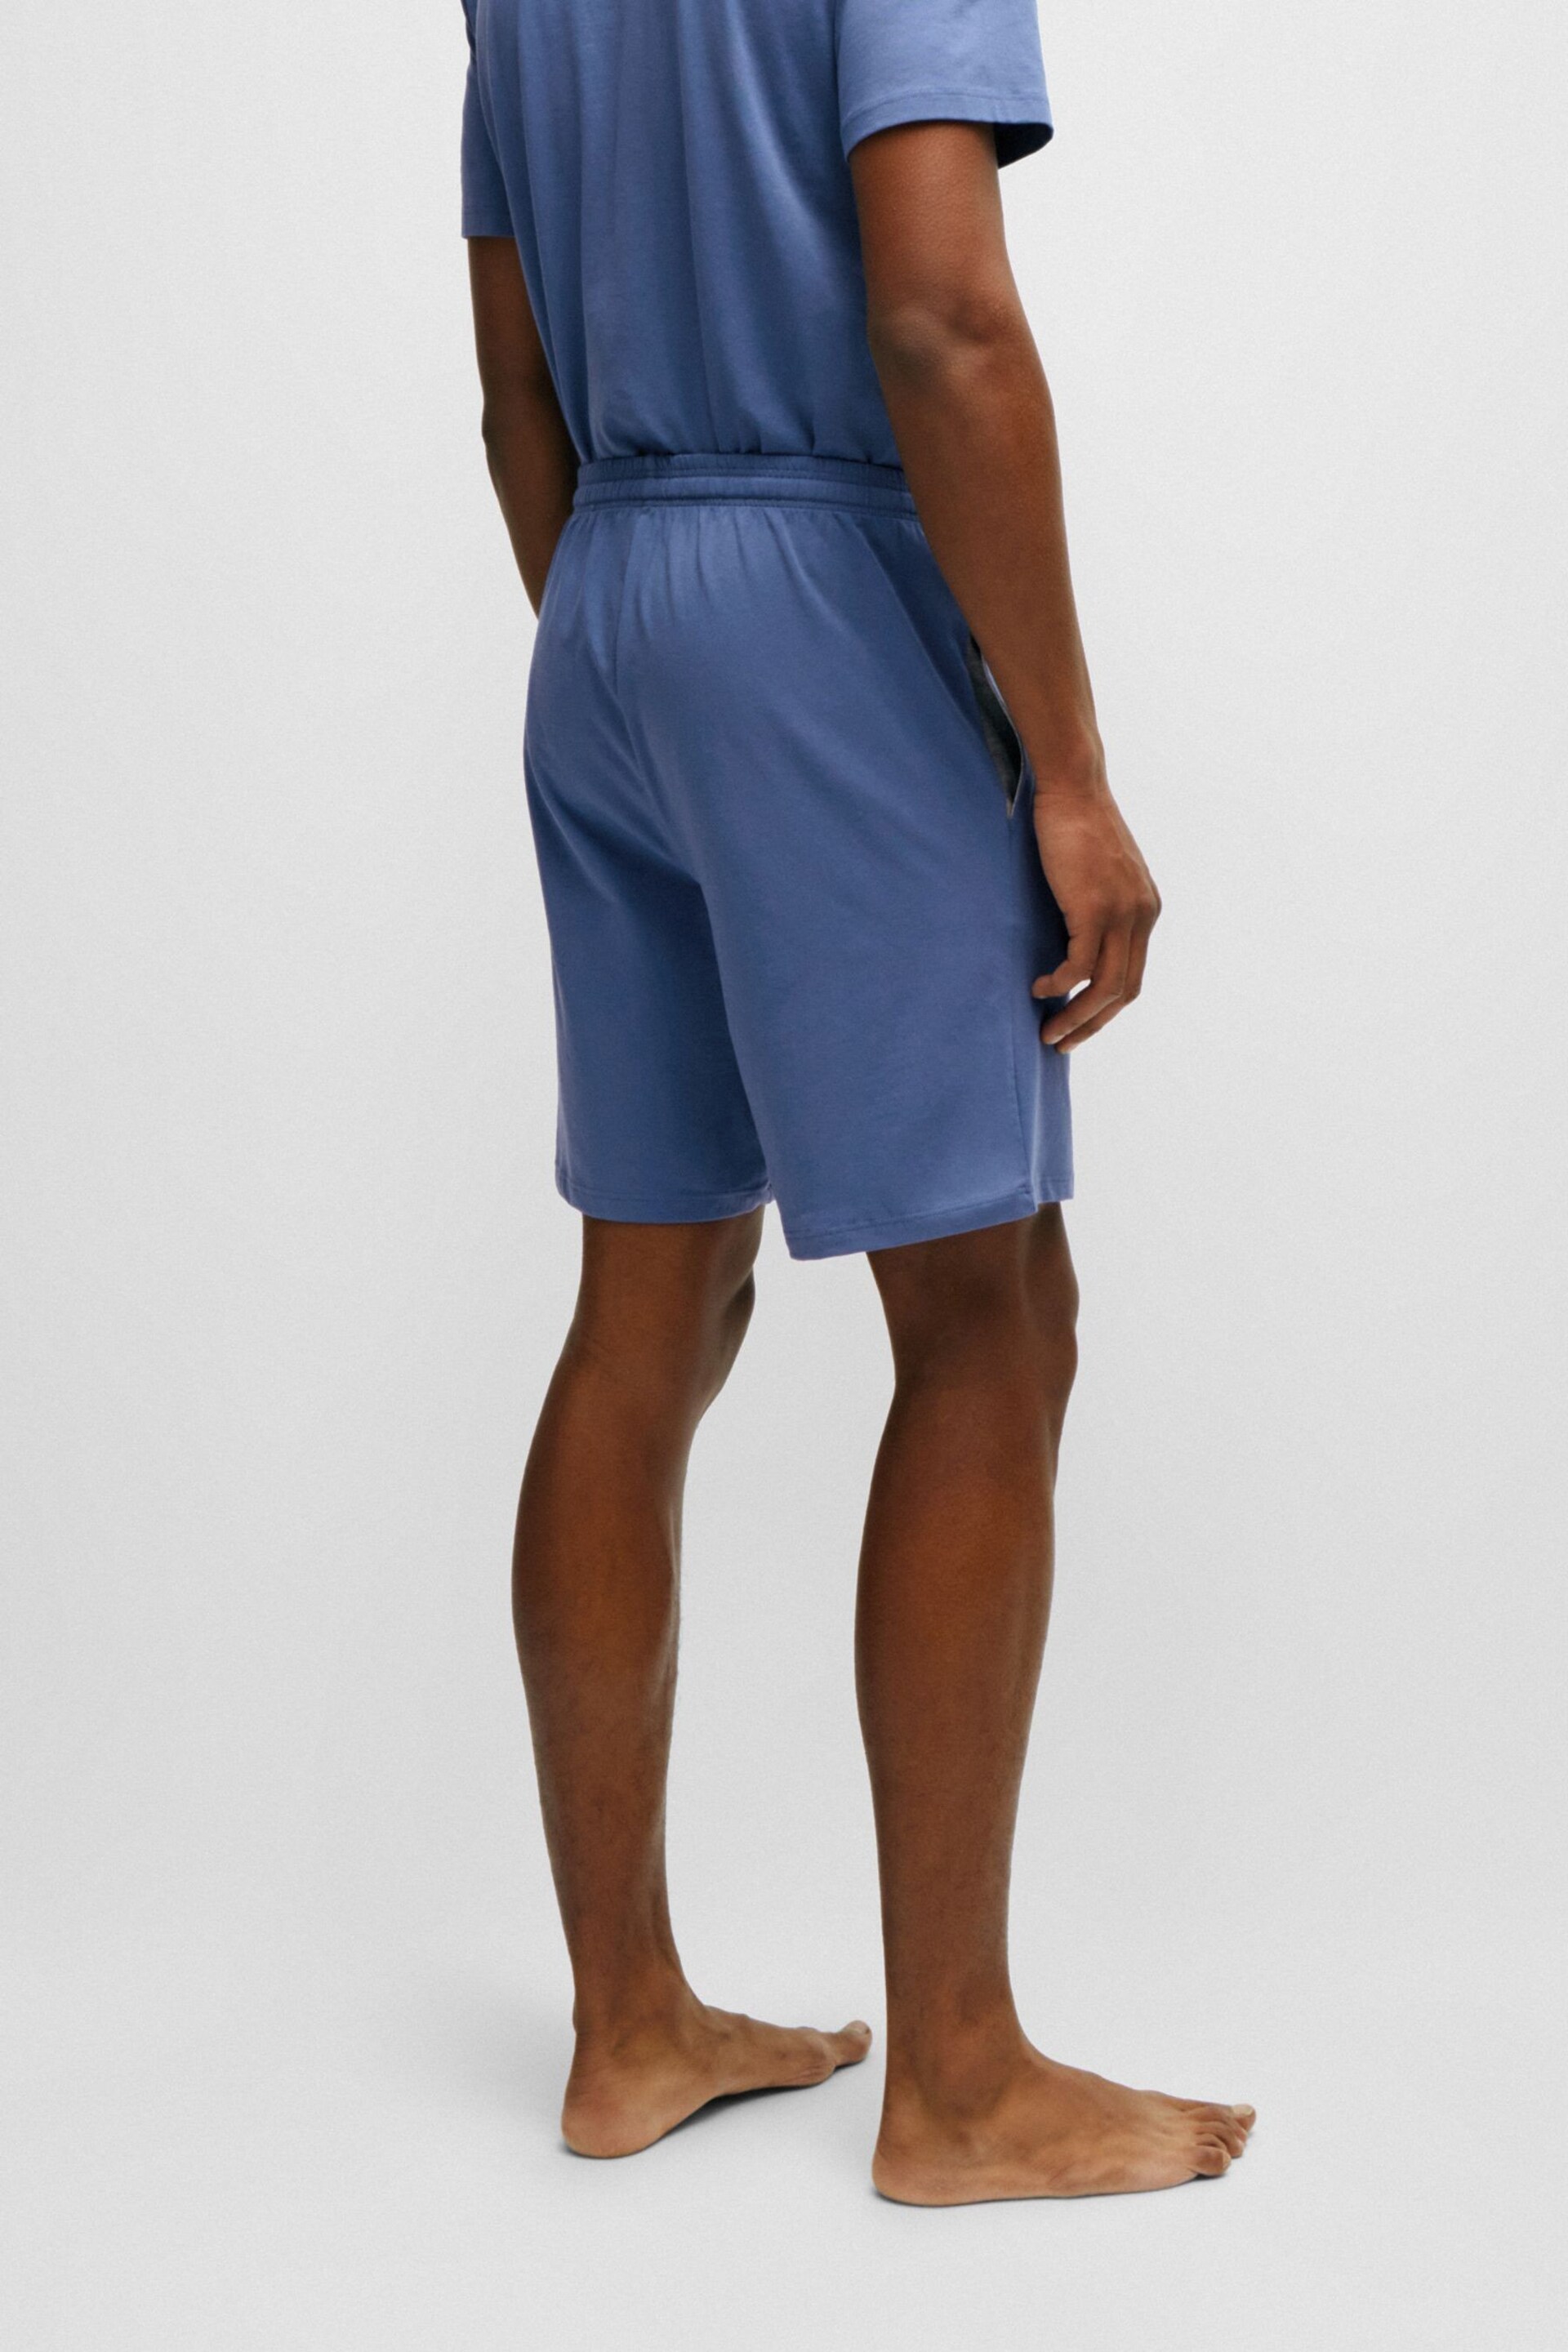 BOSS Blue Stretch Cotton Jersey Shorts - Image 2 of 2